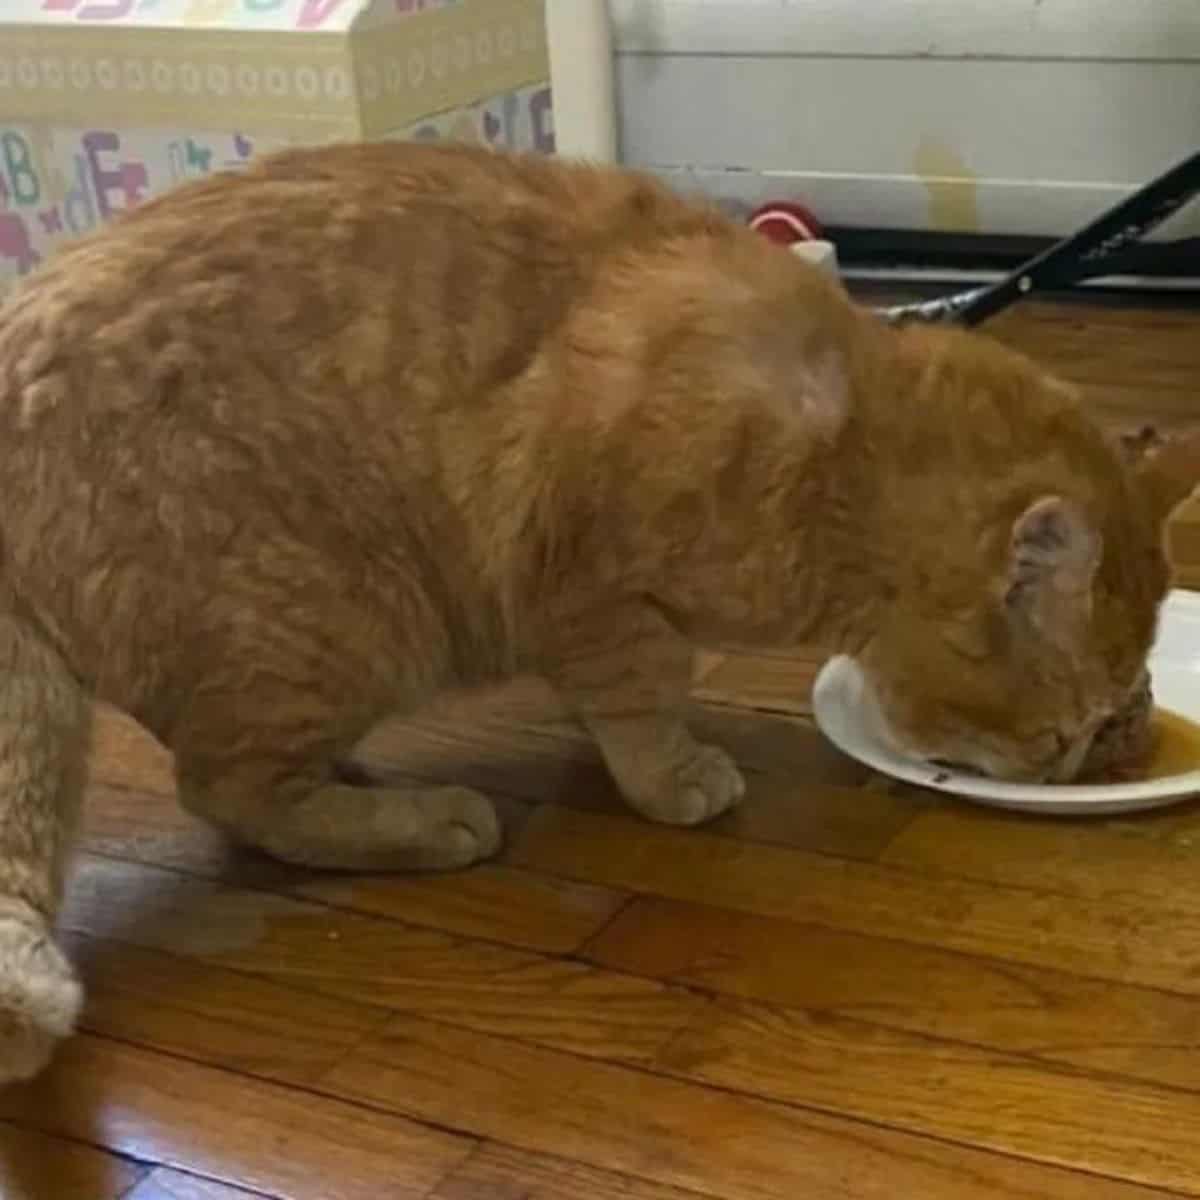 Orange cat eating from bowl